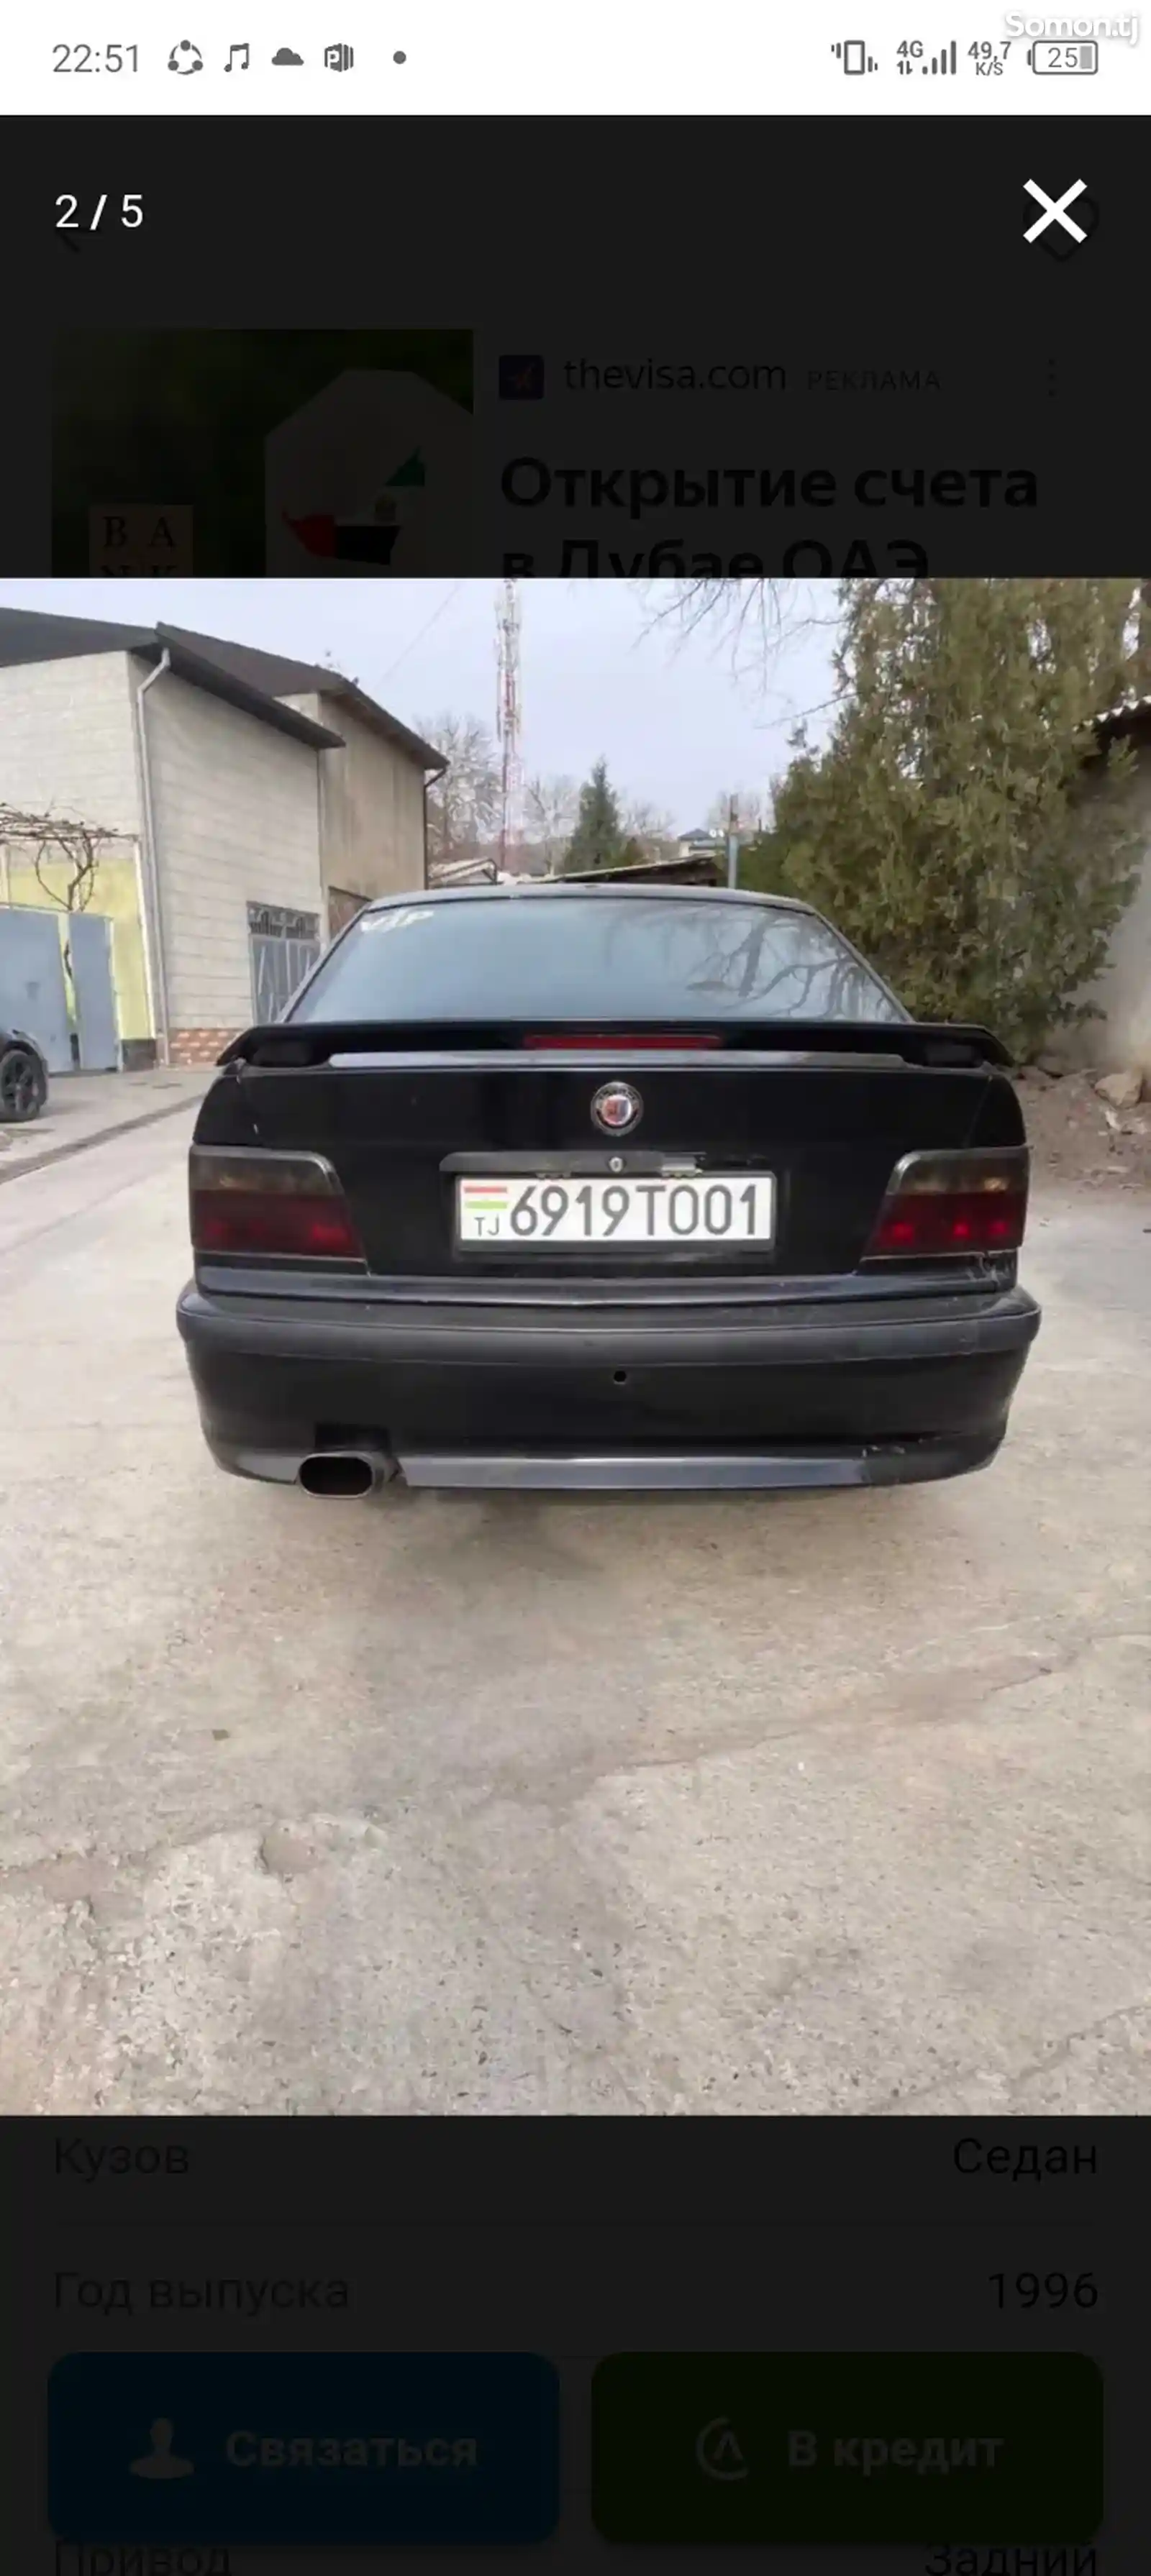 BMW 3 series, 1995-2